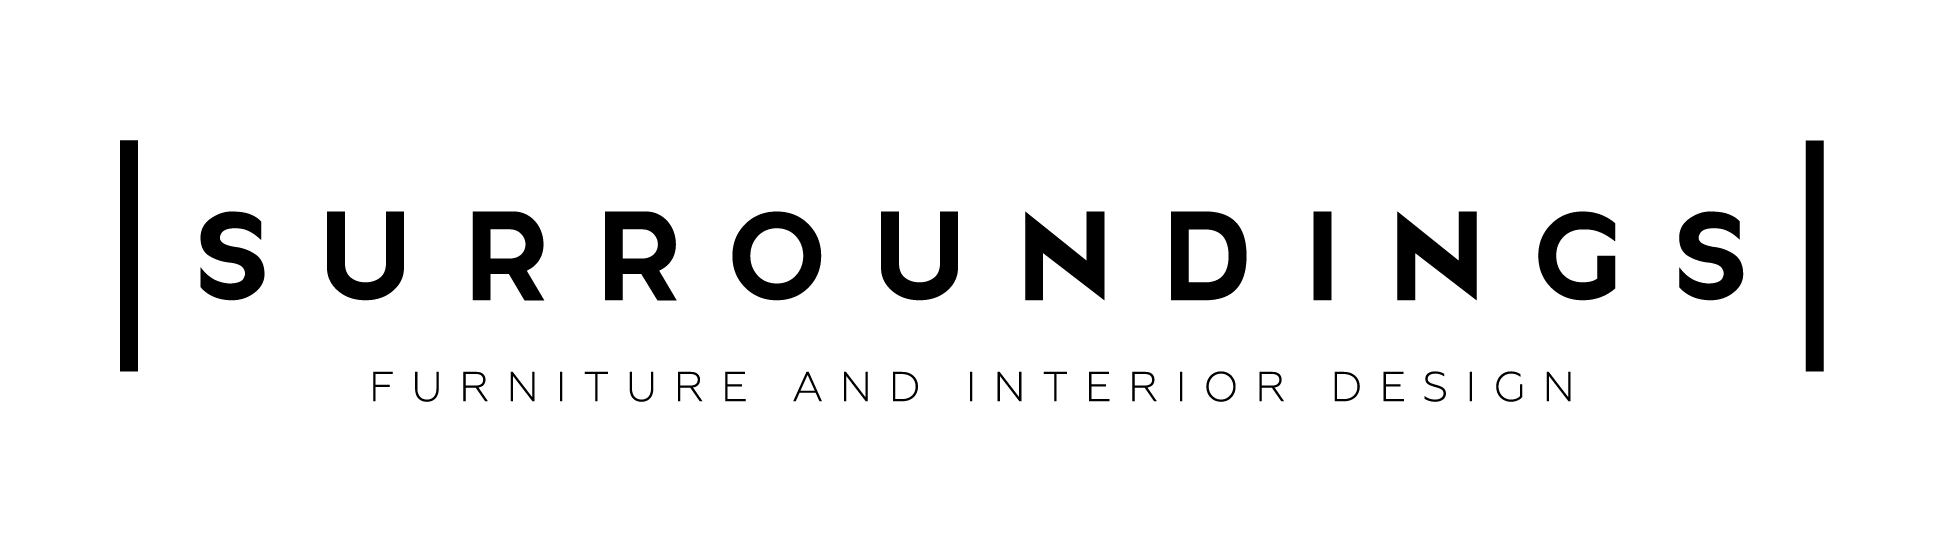 Surroundings Furniture and Interior Design Logo